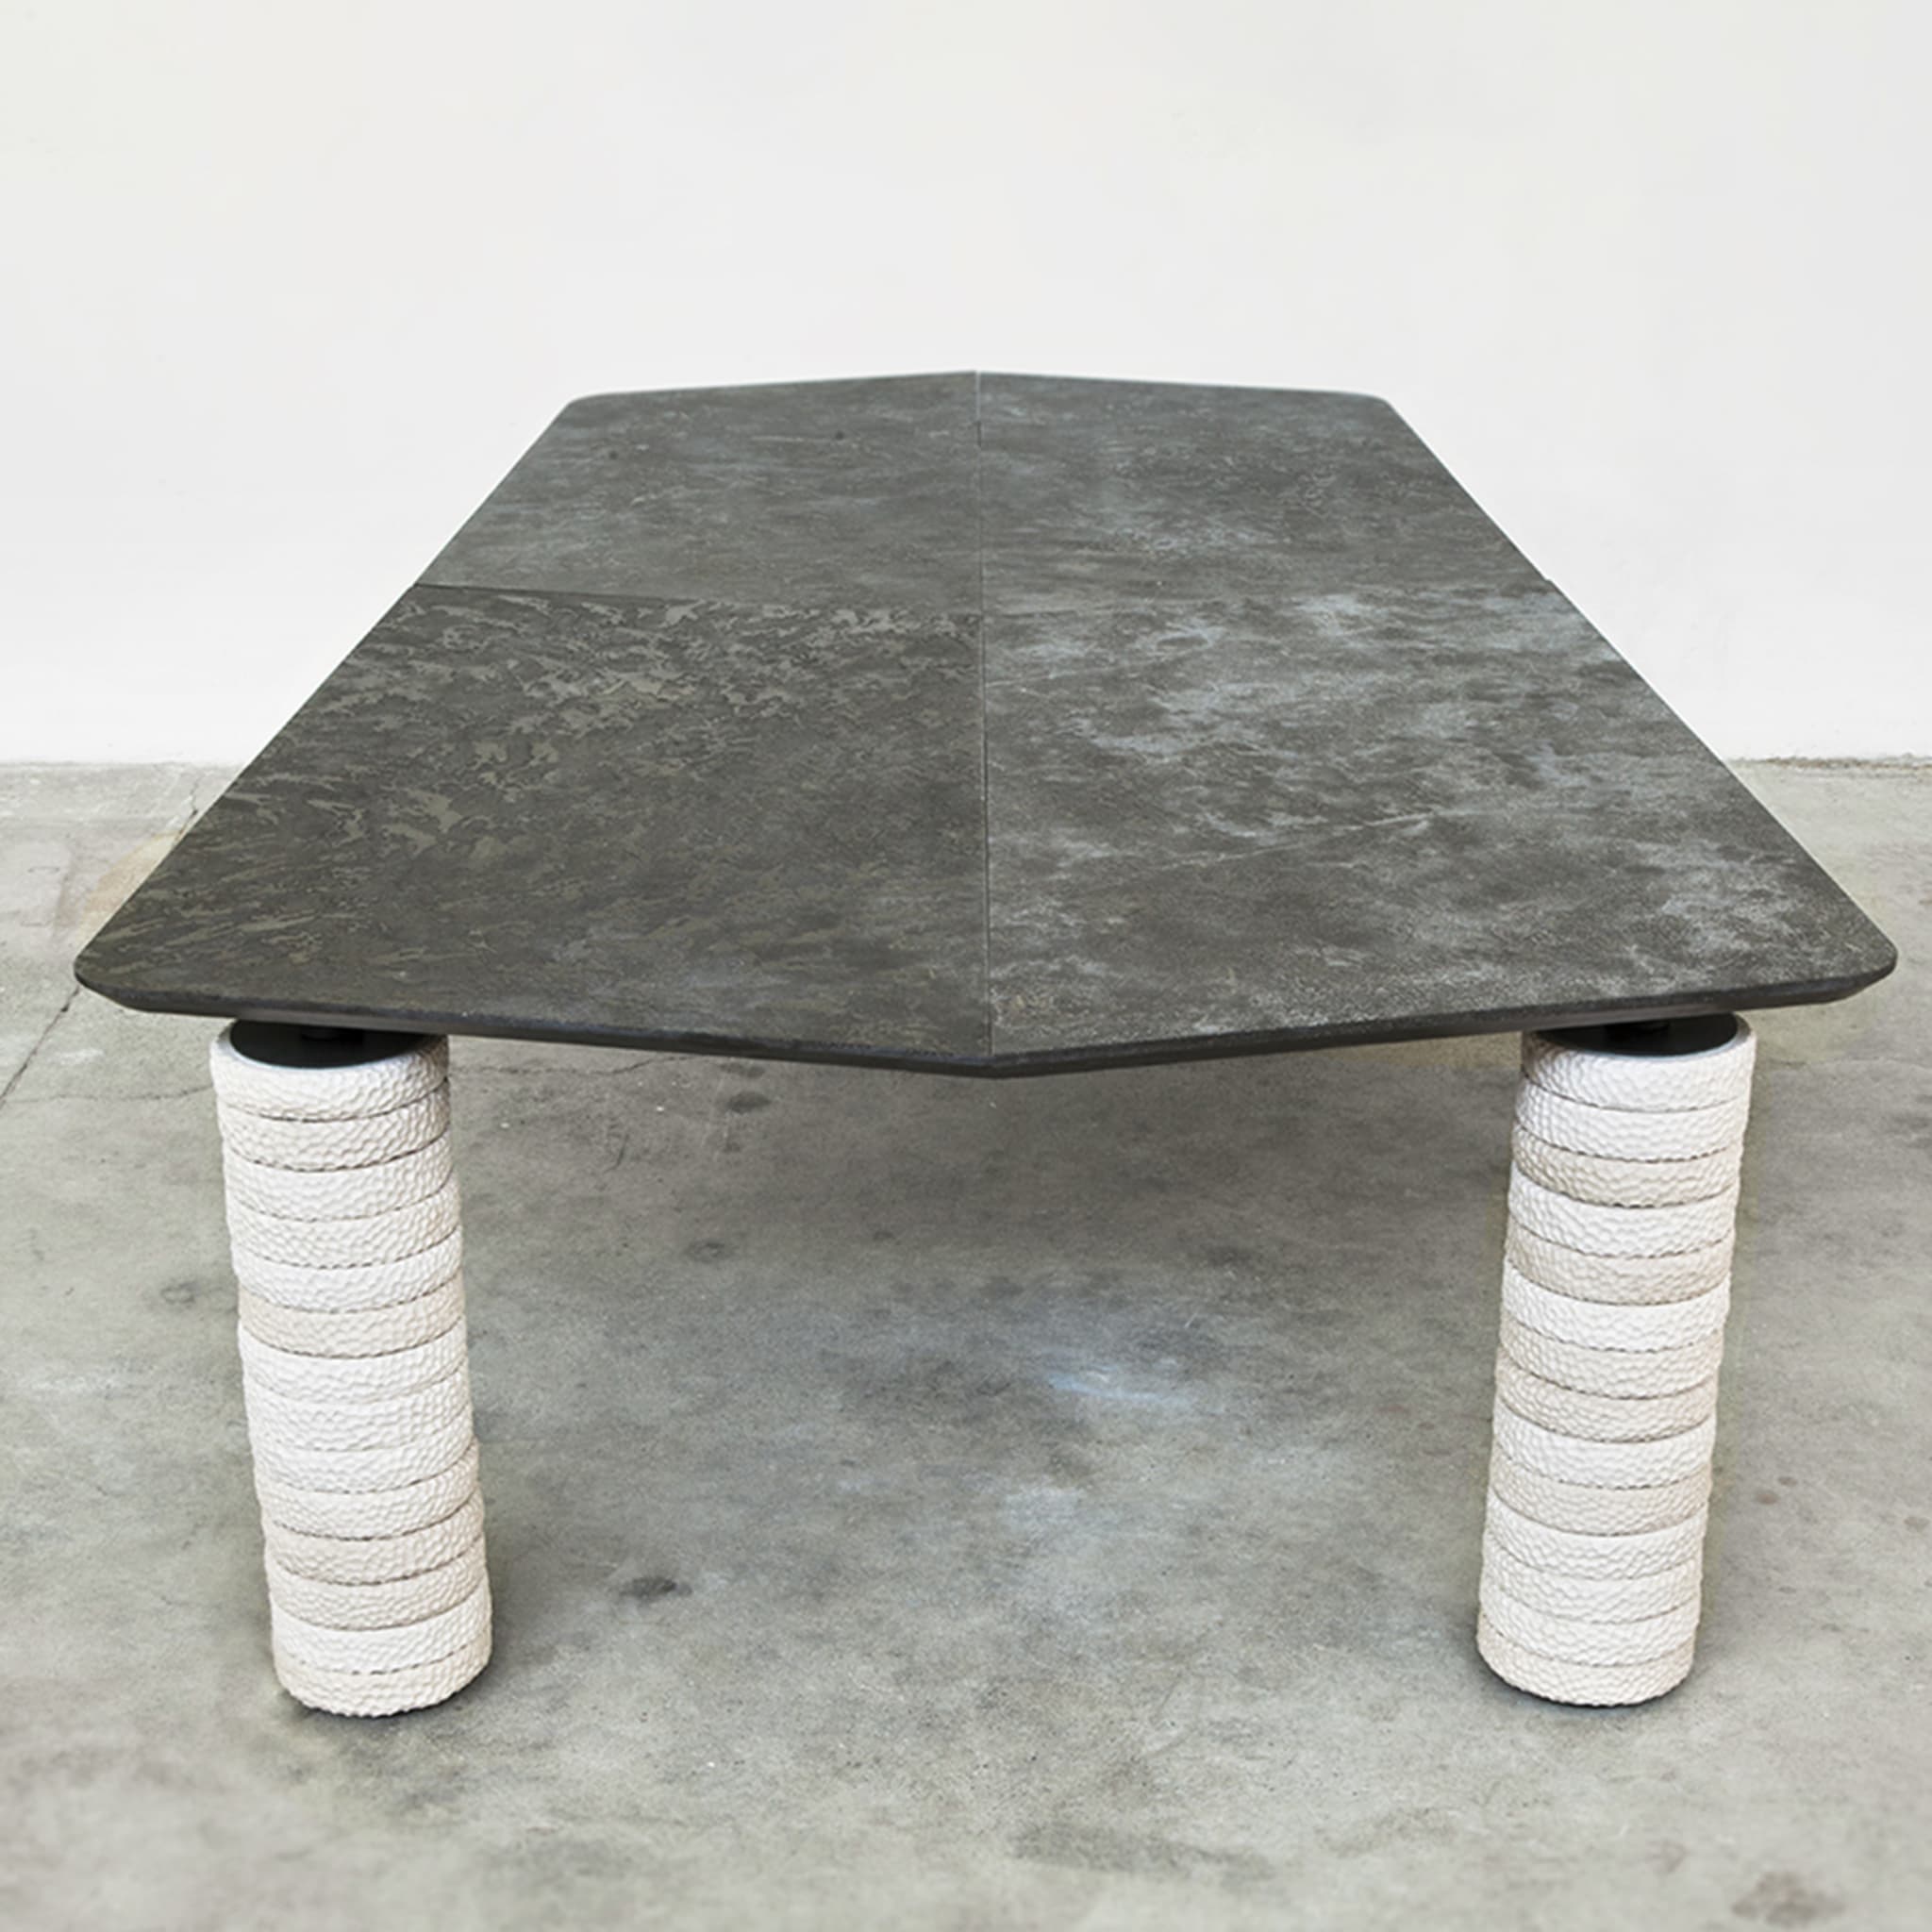 Manta Gray & White Table - Alternative view 1